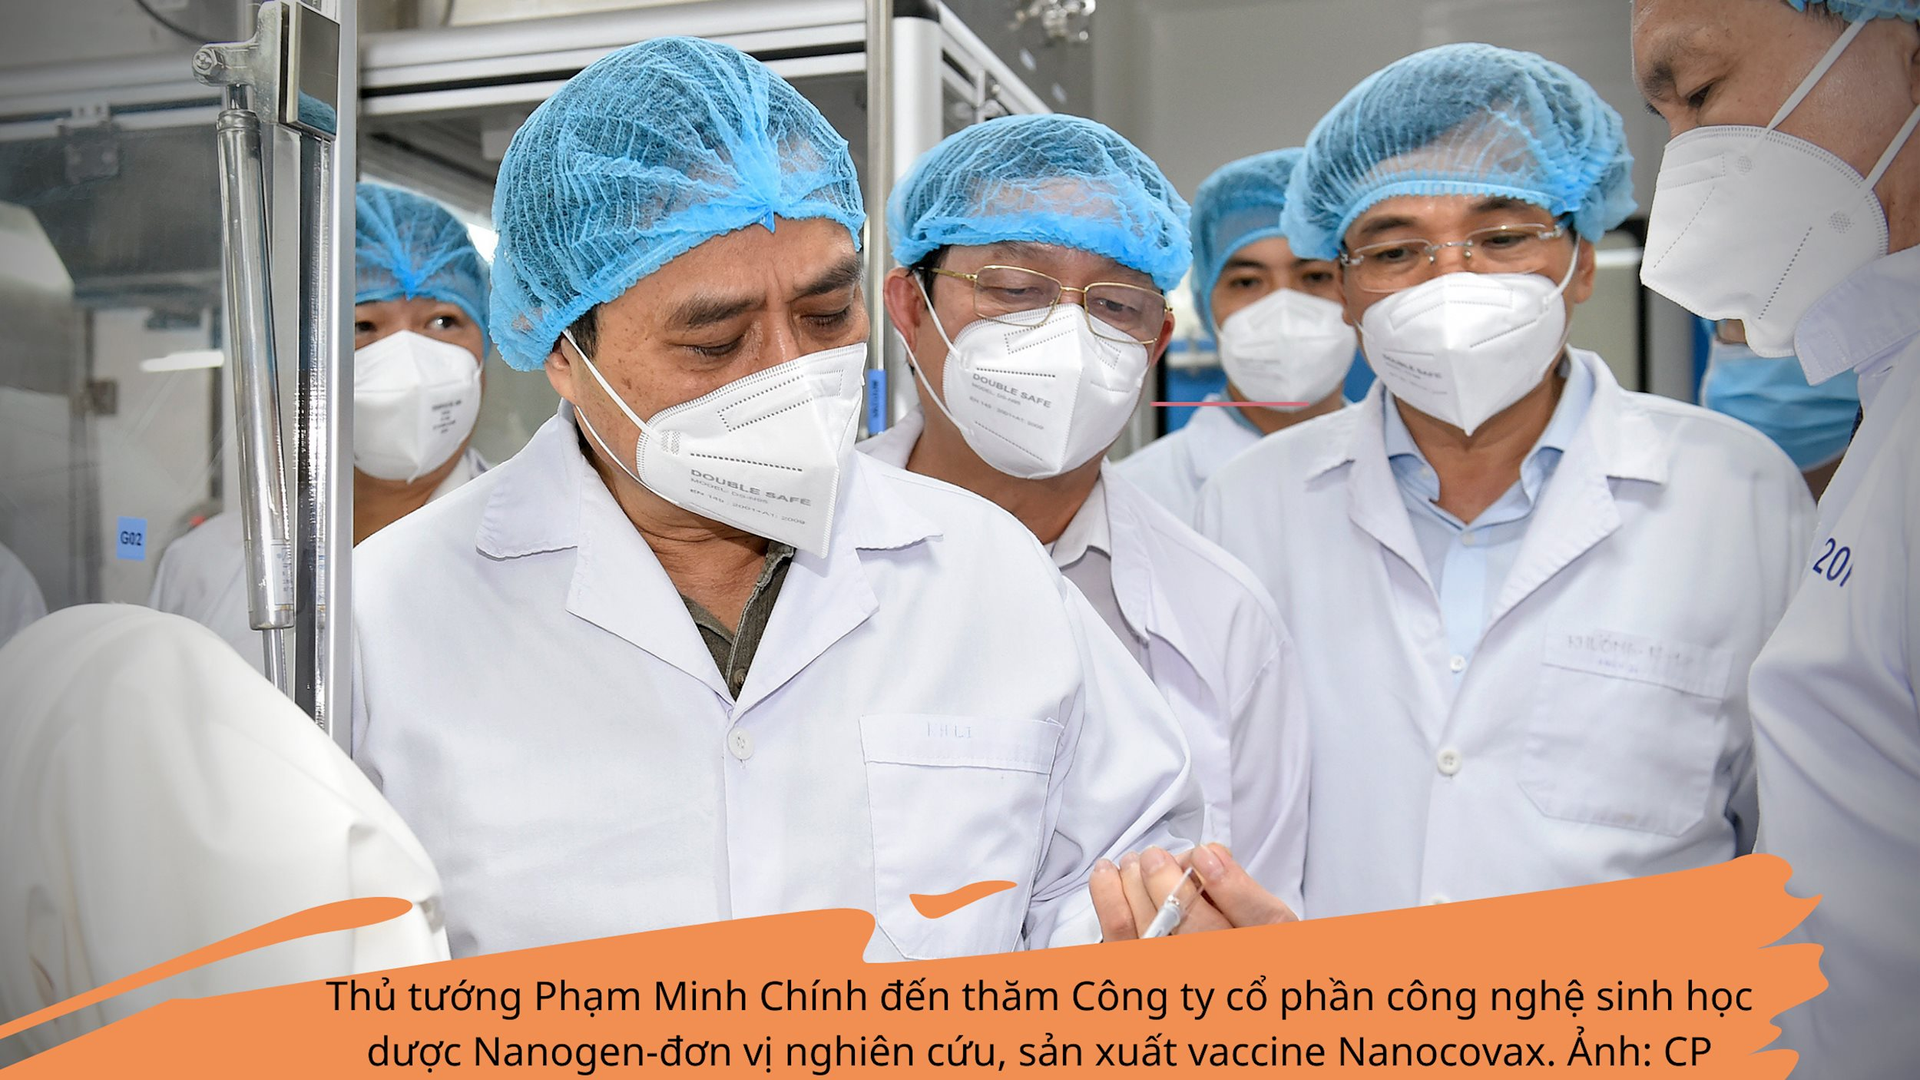 thu-tuong-pham-minh-chinh-den-tham-cong-ty-co-phan-cong-nghe-sinh-hoc-duoc-nanogen-don-vi-nghien-cuu-san-xuat-vaccine-nanocovax.png